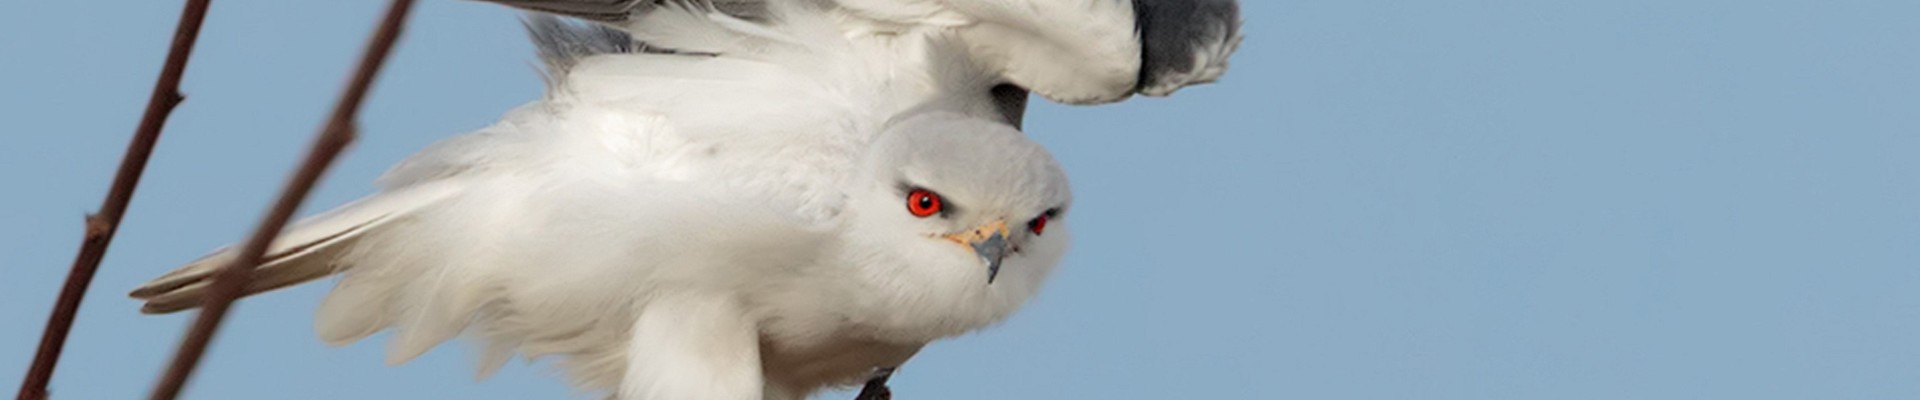 Il Birdwatching Italiano | check list degli uccelli italiani | attrezzatura per birdwatching